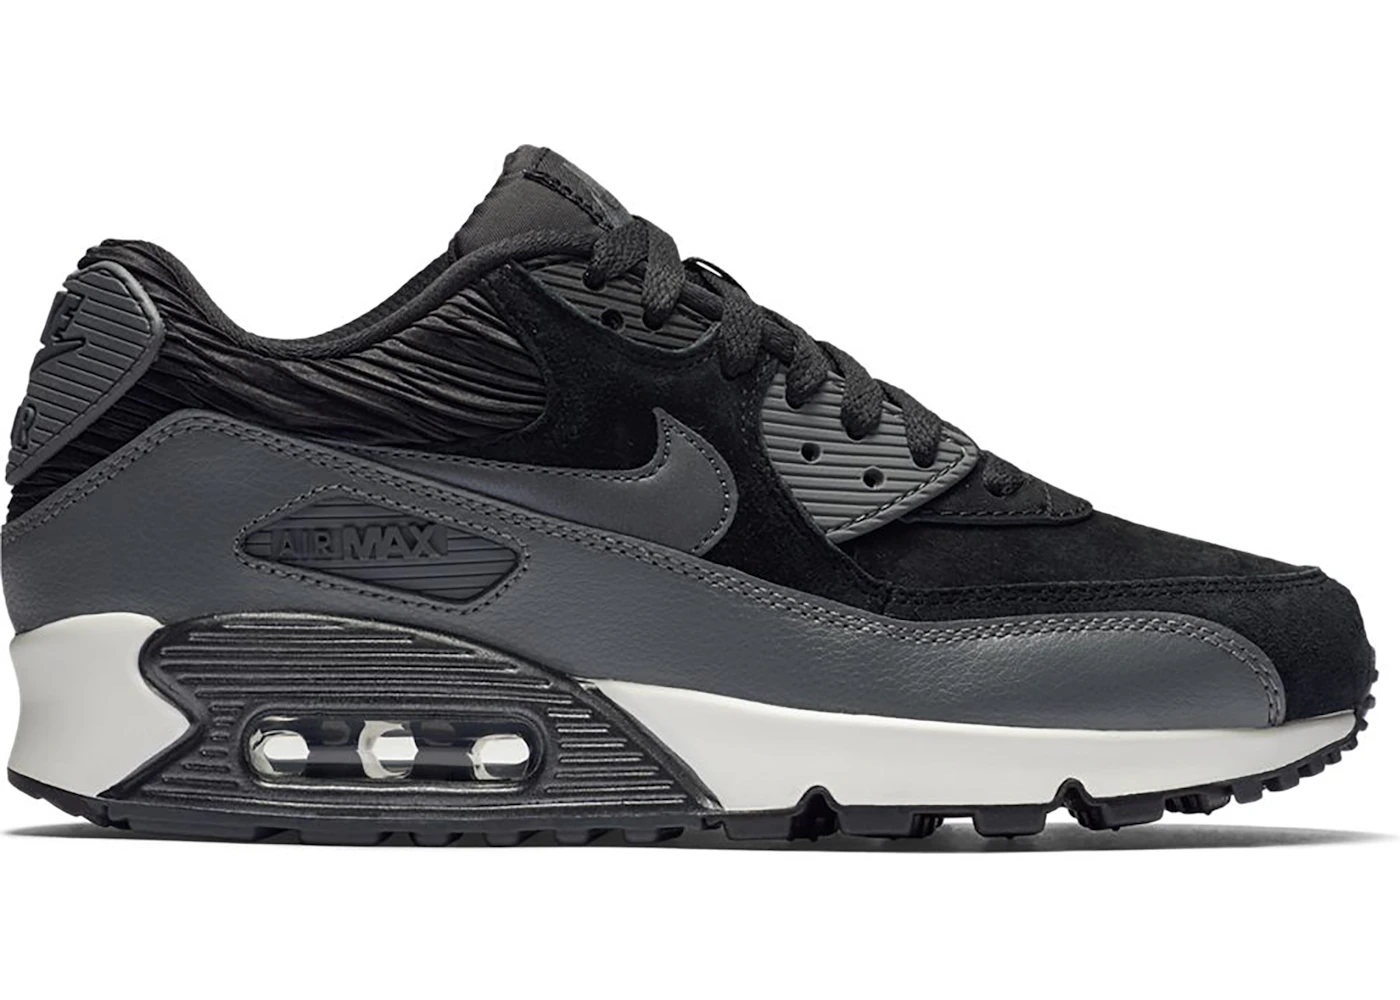 Nike Air Max 90 Leather Black Dark Grey (Women's) - 768887-001 - US